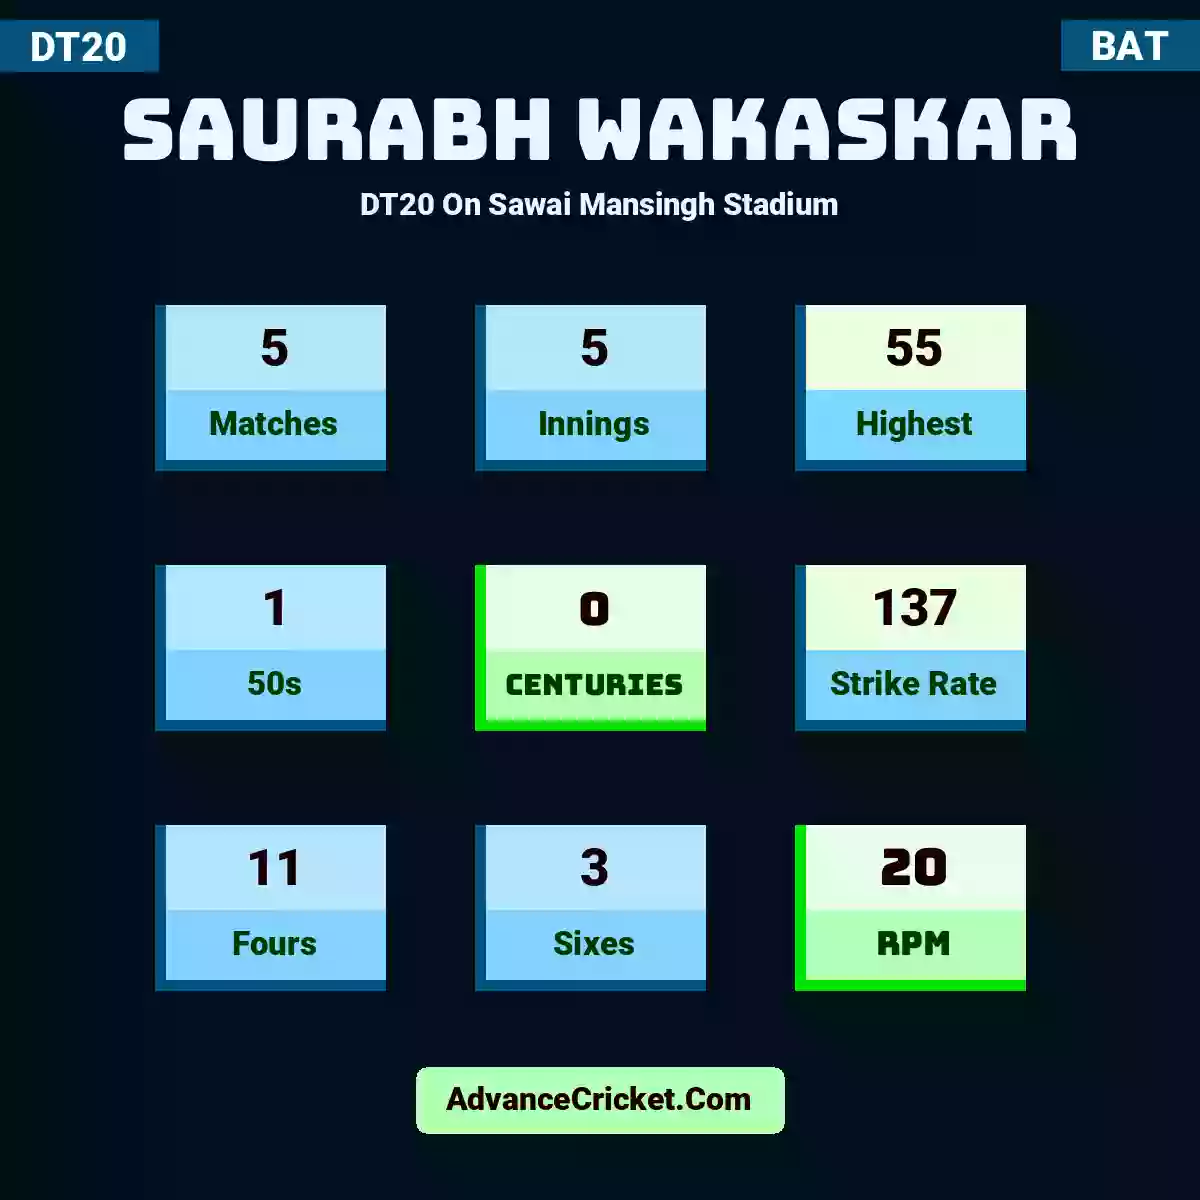 Saurabh Wakaskar DT20  On Sawai Mansingh Stadium, Saurabh Wakaskar played 5 matches, scored 55 runs as highest, 1 half-centuries, and 0 centuries, with a strike rate of 137. S.Wakaskar hit 11 fours and 3 sixes, with an RPM of 20.